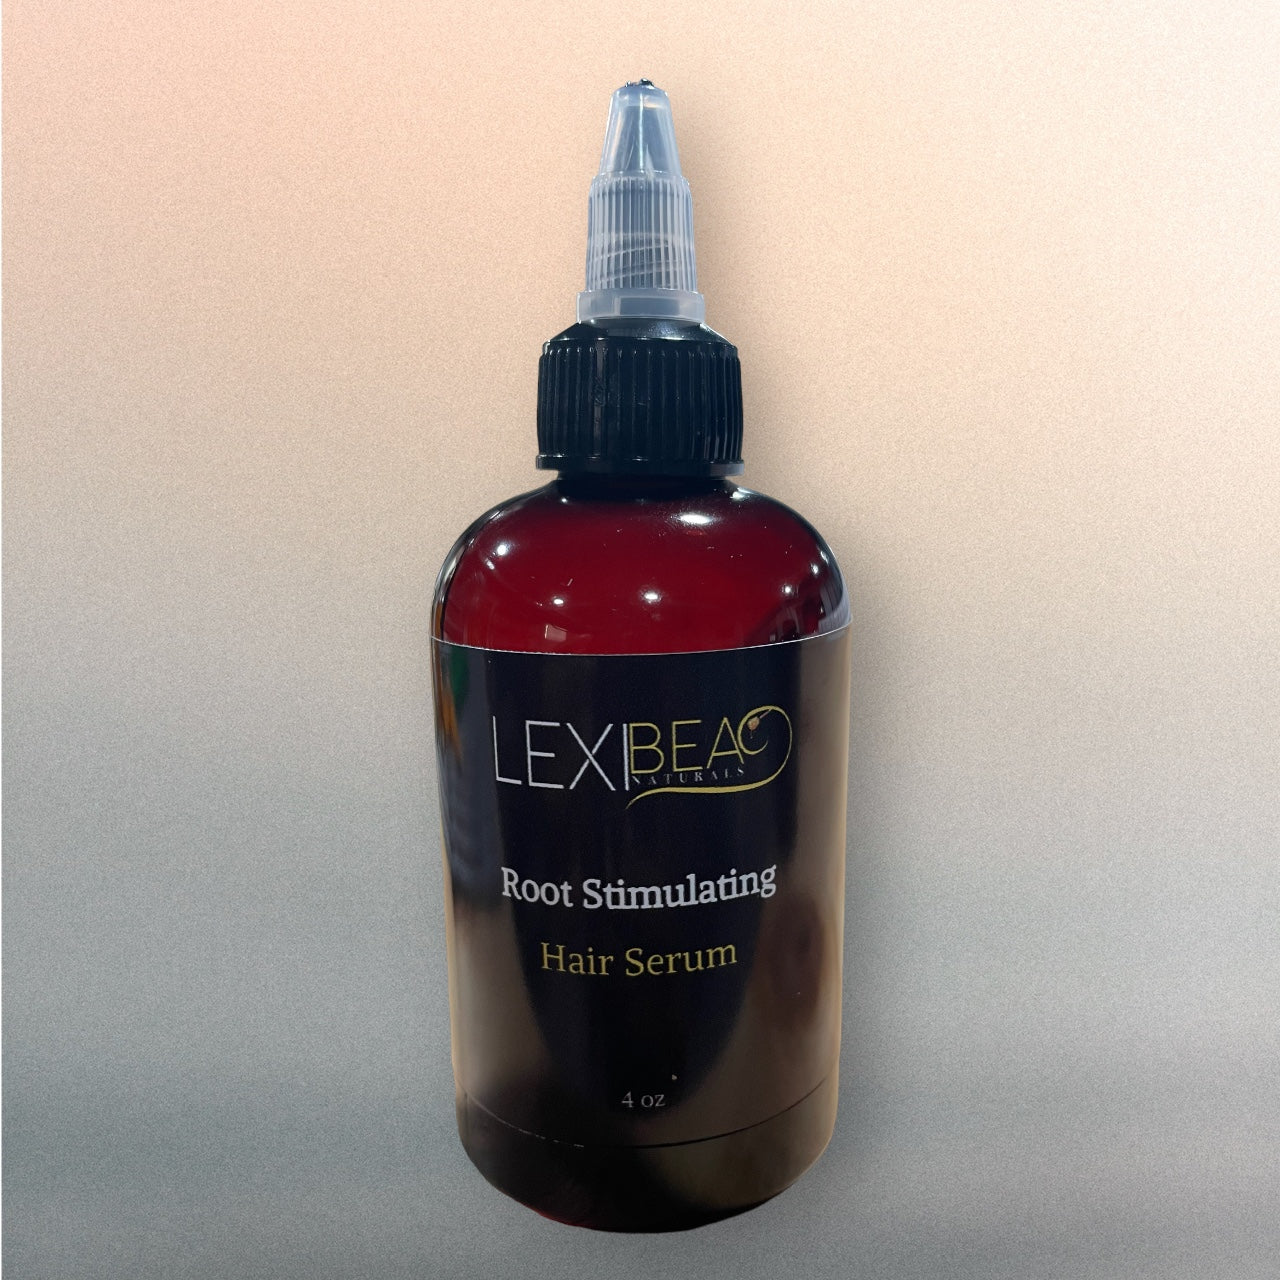 Root Stimulating Hair Serum (4 oz bottle) - Two month supply